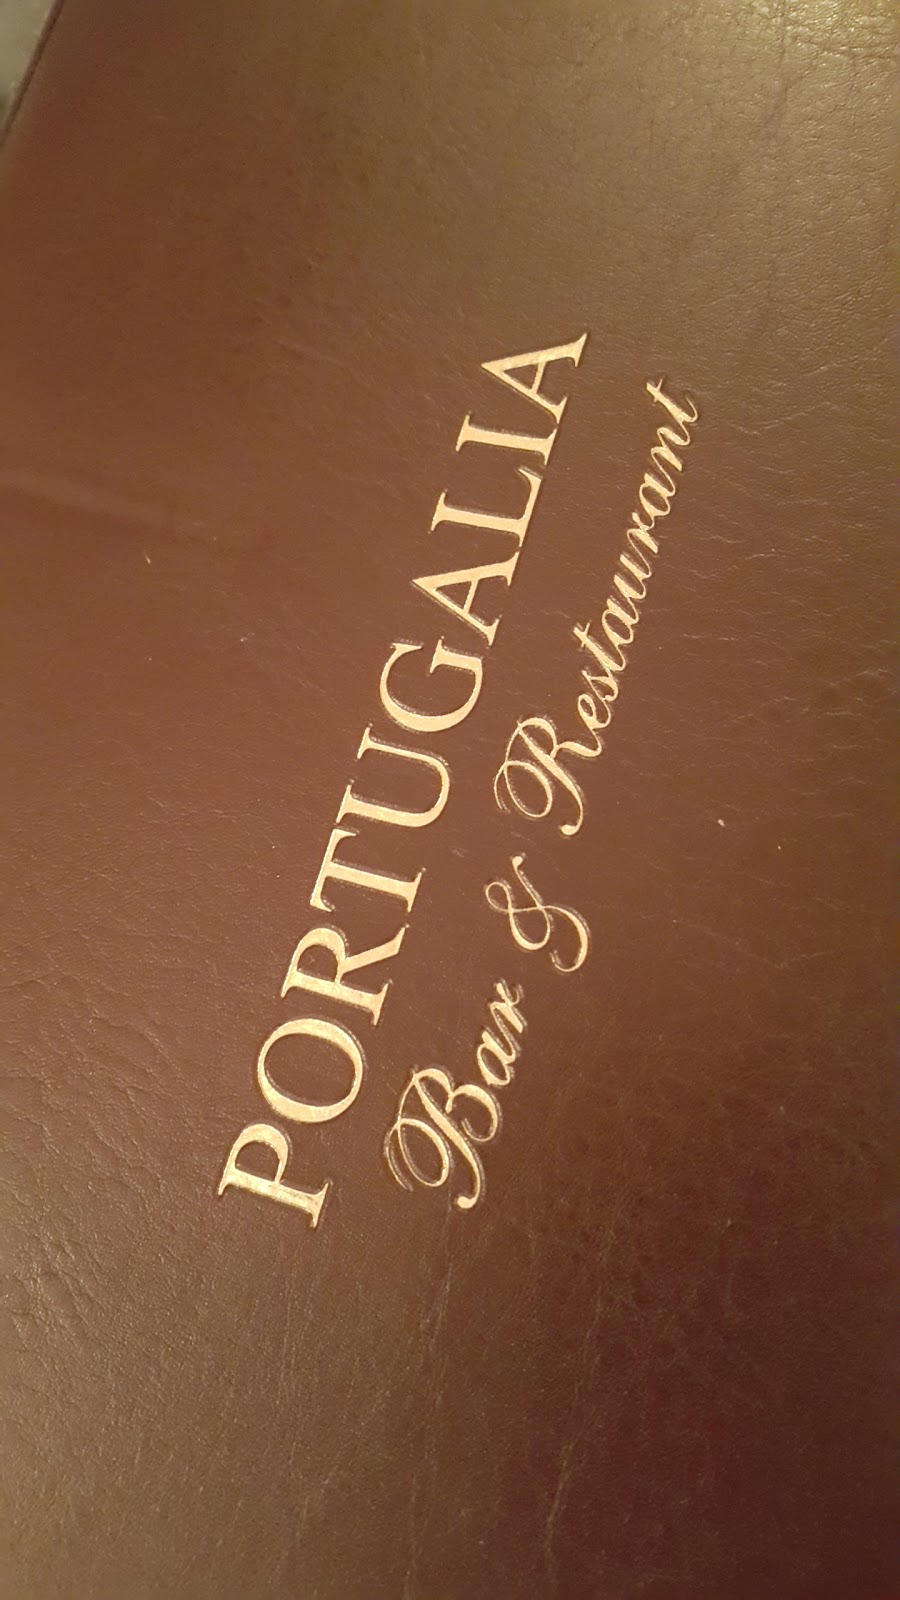 Photo of Portugalia Bar & Restaurant in Newark City, New Jersey, United States - 7 Picture of Restaurant, Food, Point of interest, Establishment, Bar